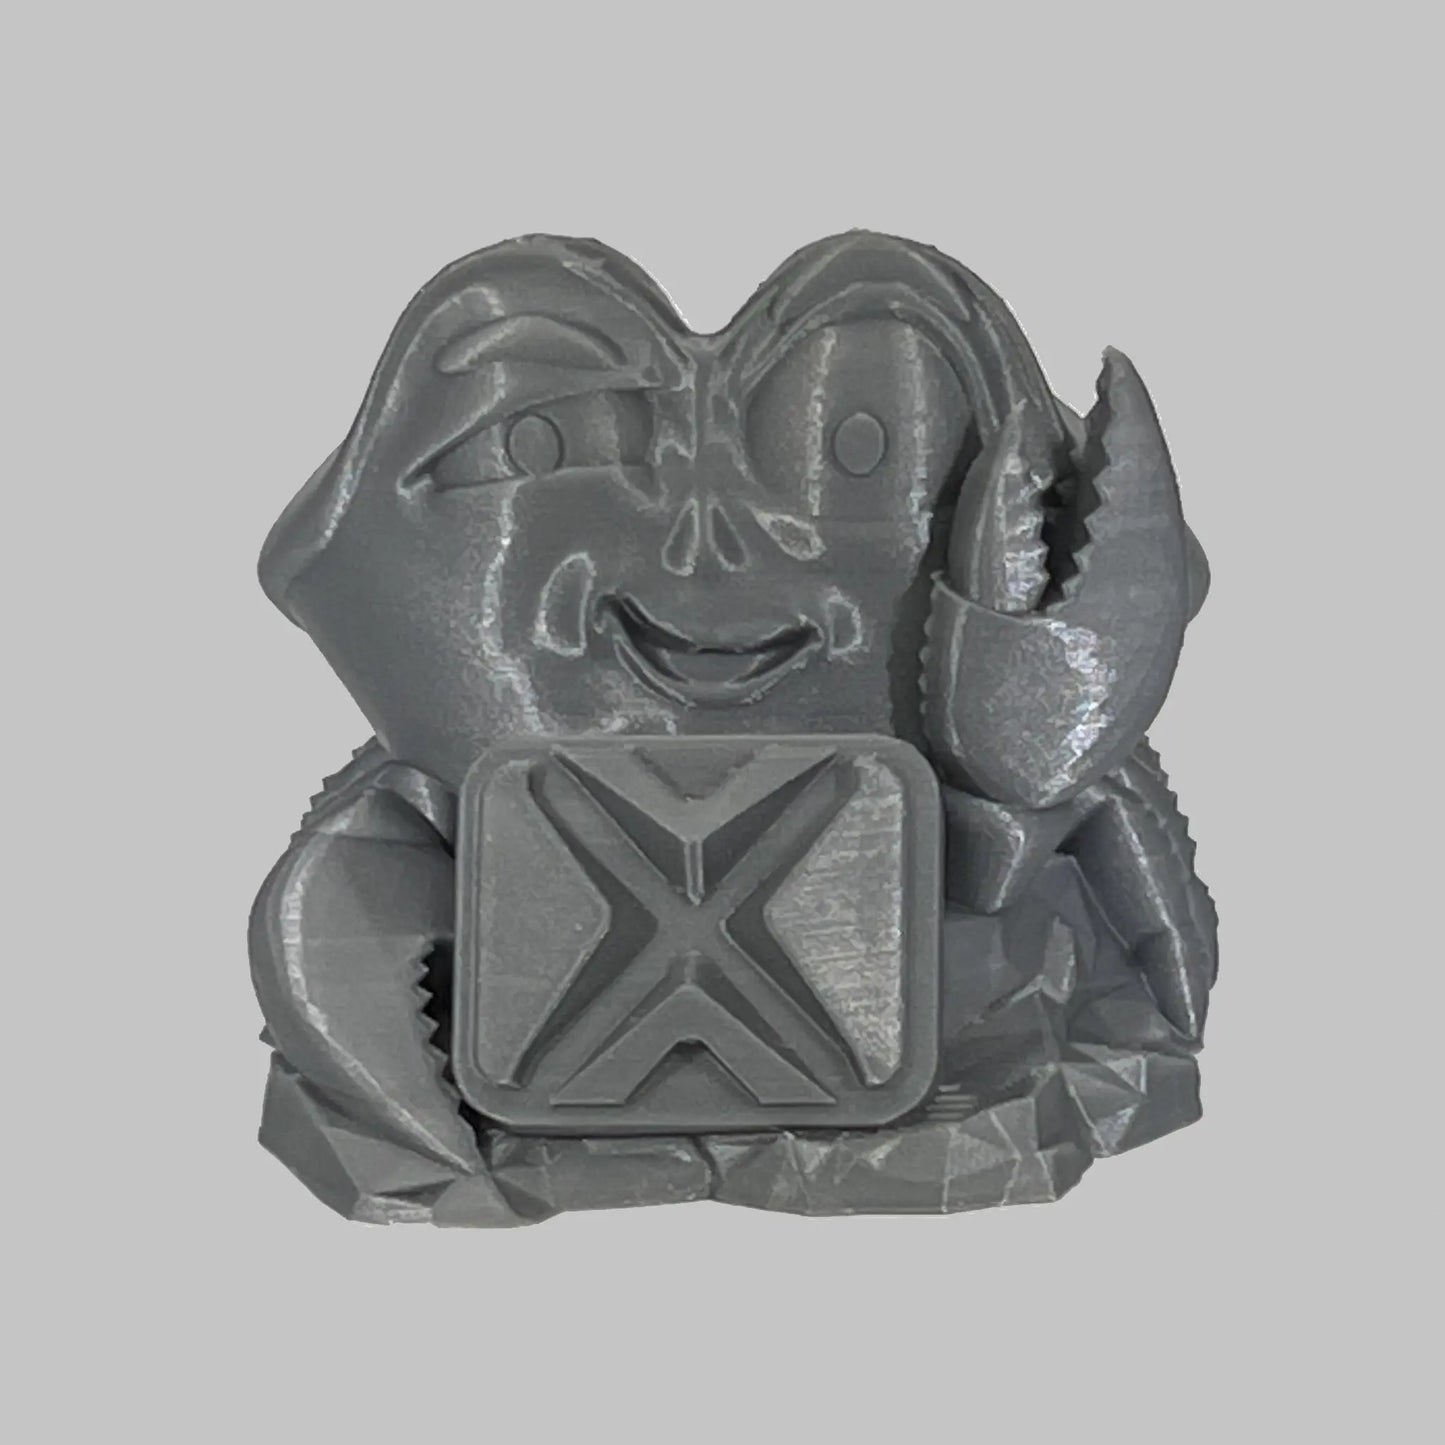 Metallic Silver ASA Prime COEX 3D